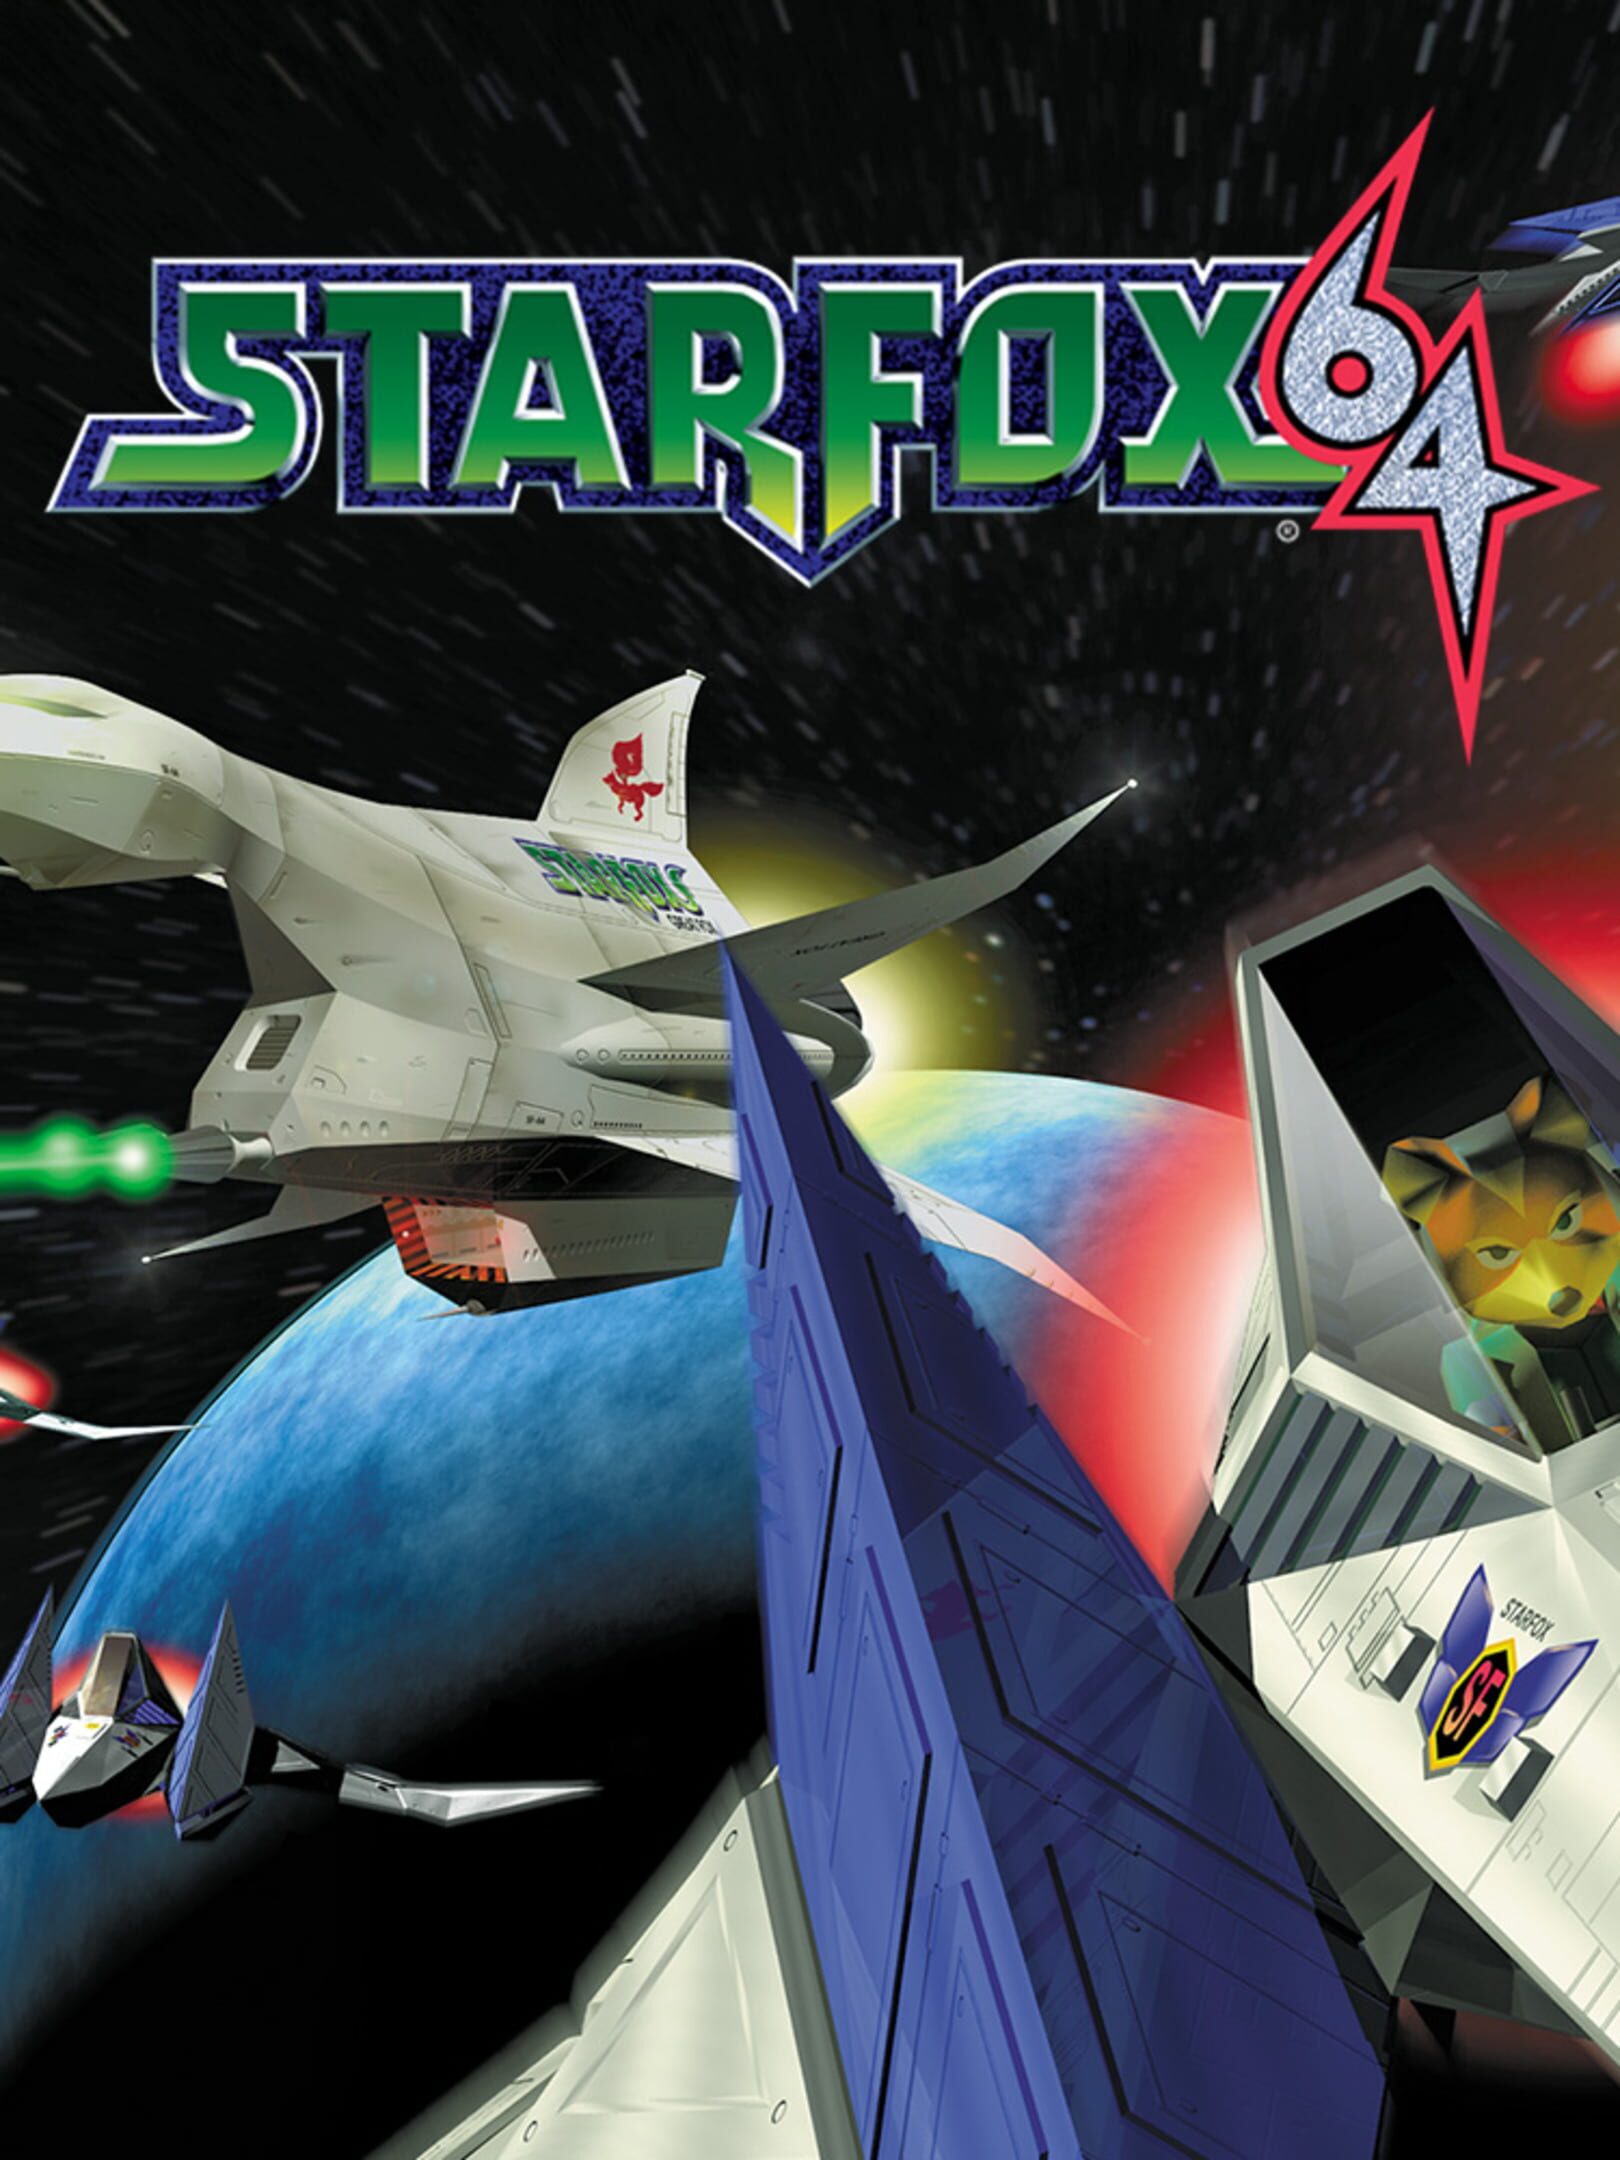 Star Fox 64 3D Review – Wizard Dojo